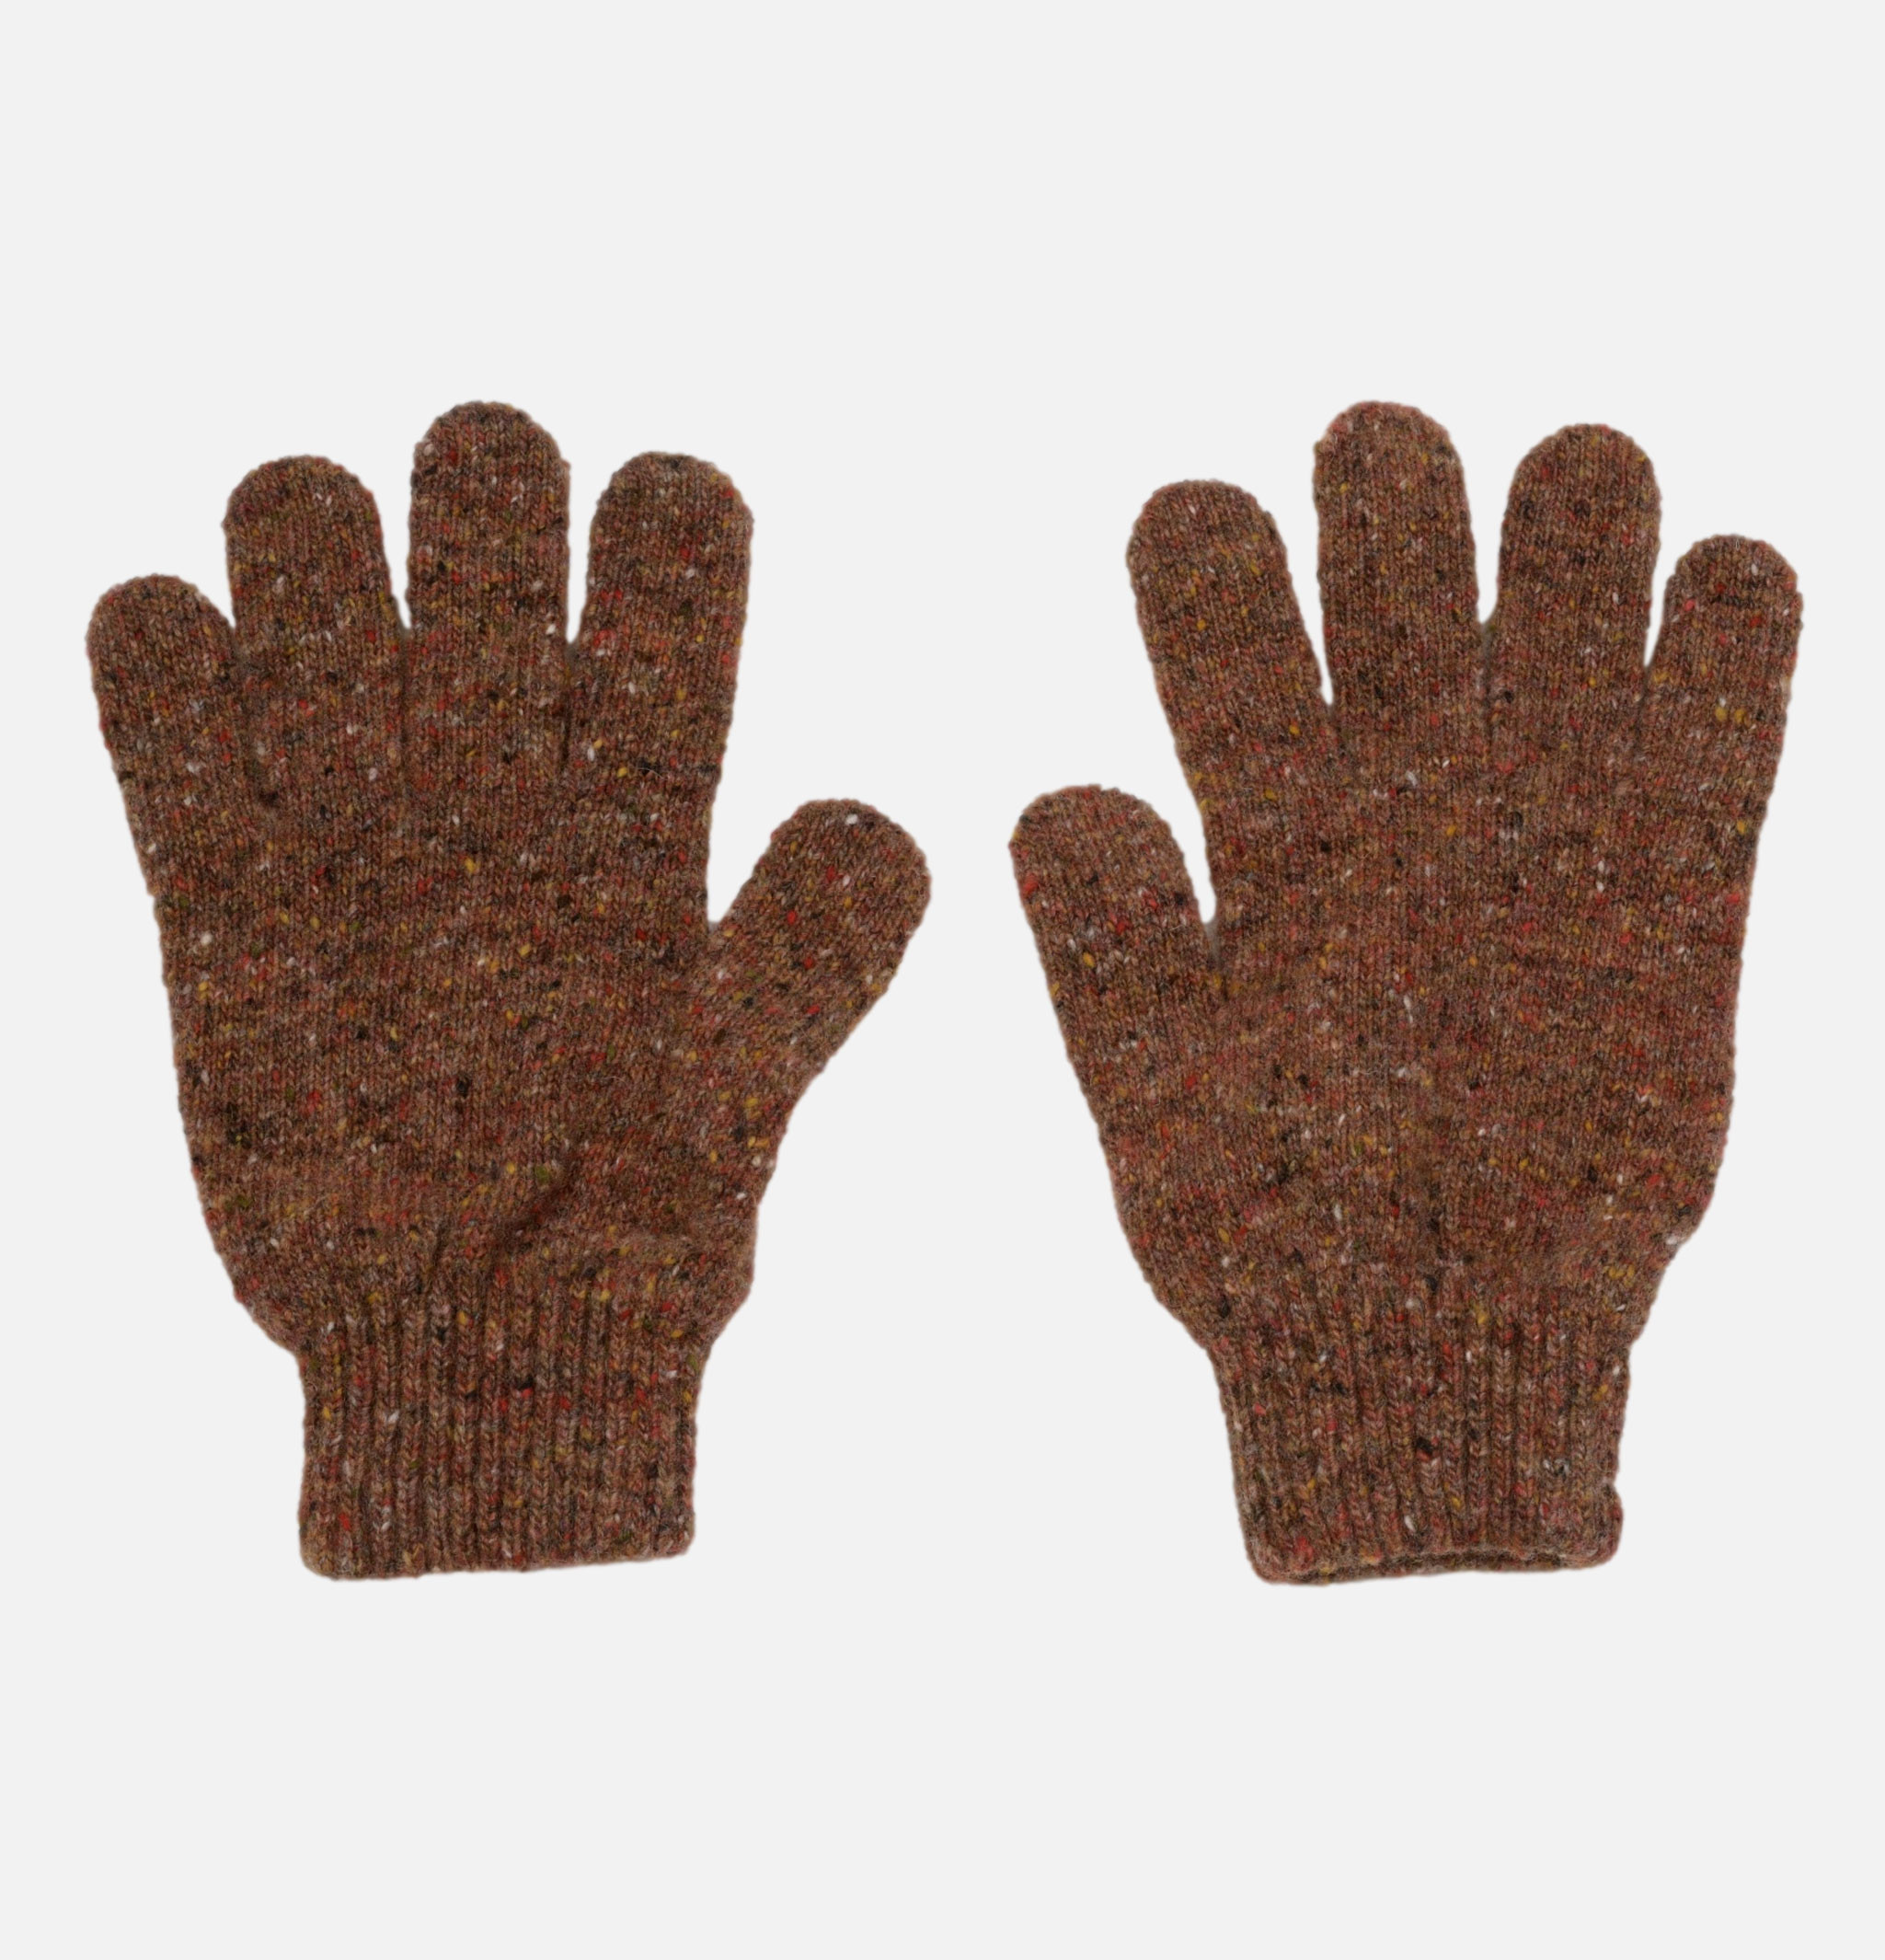 Robert Mackie Donegal Sunset gloves